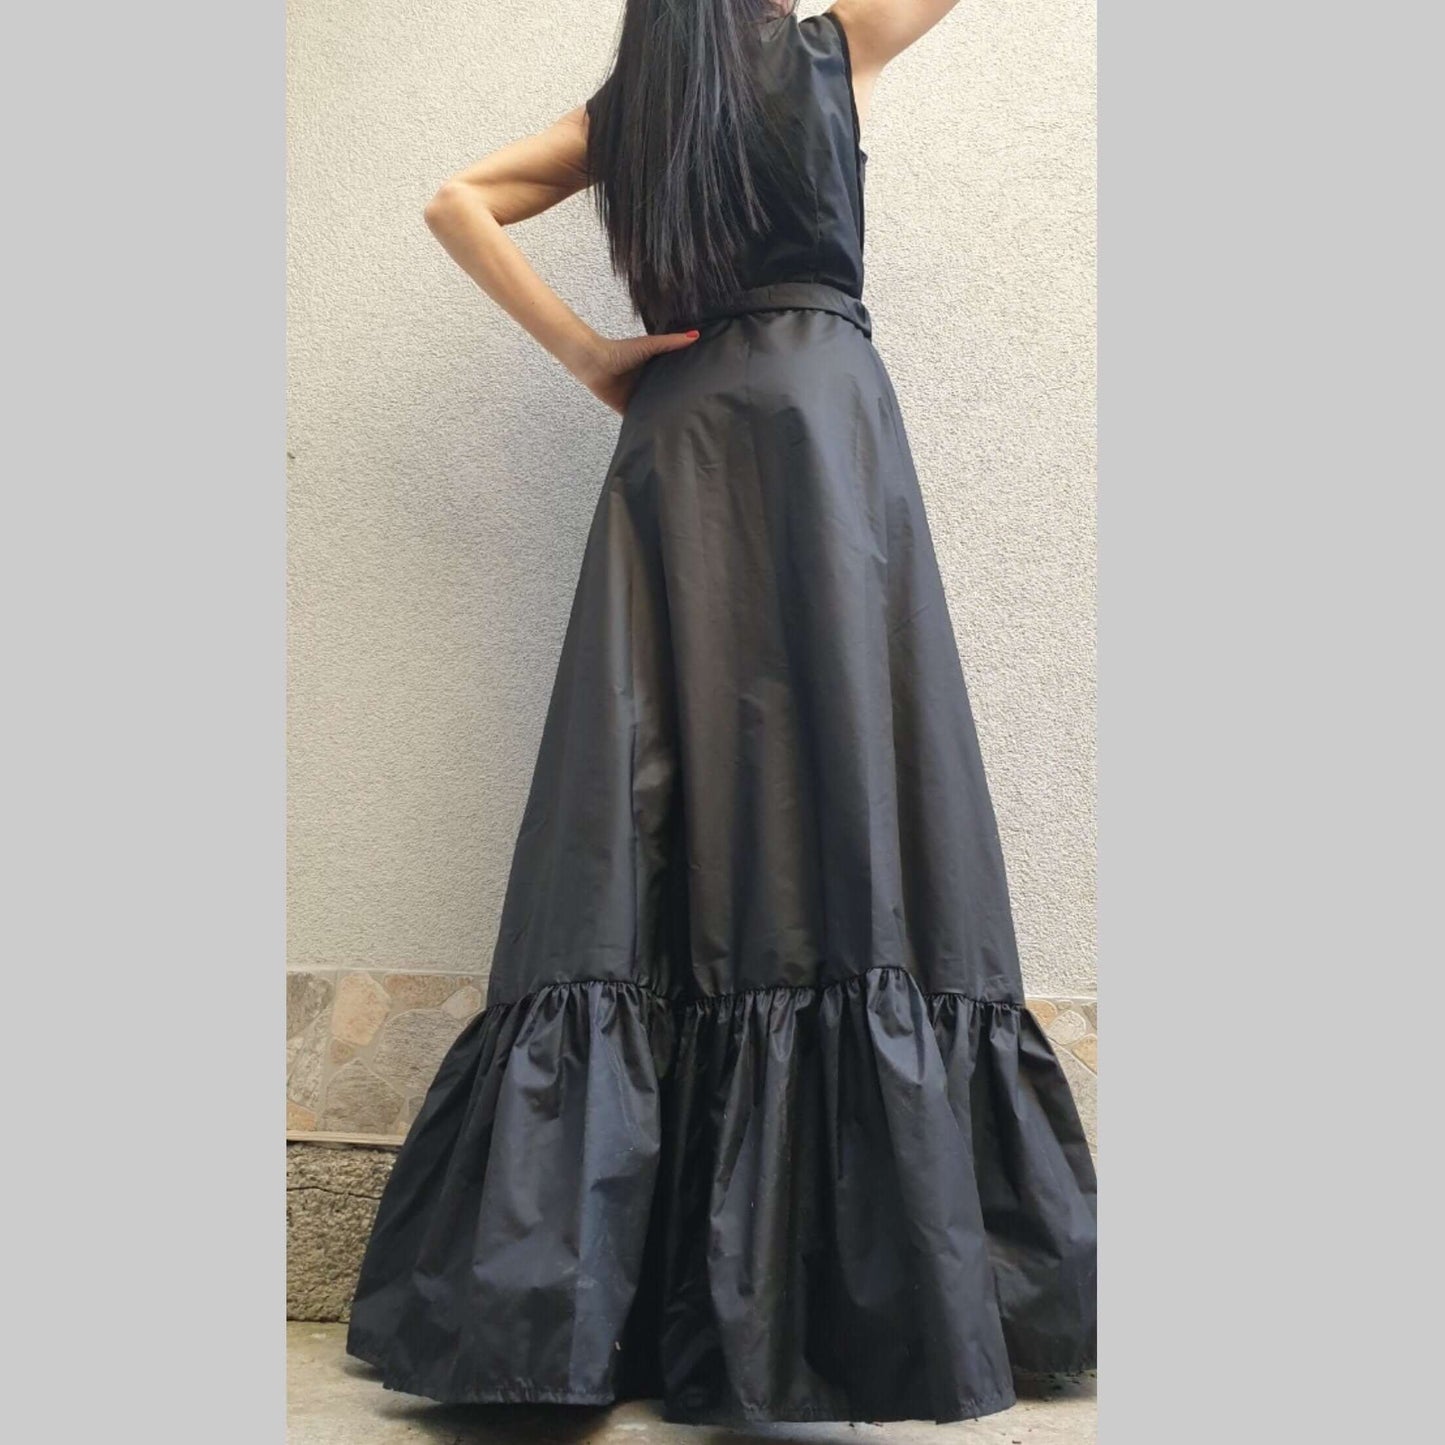 Extravagant Black Dress - Handmade clothing from AngelBySilvia - Top Designer Brands 